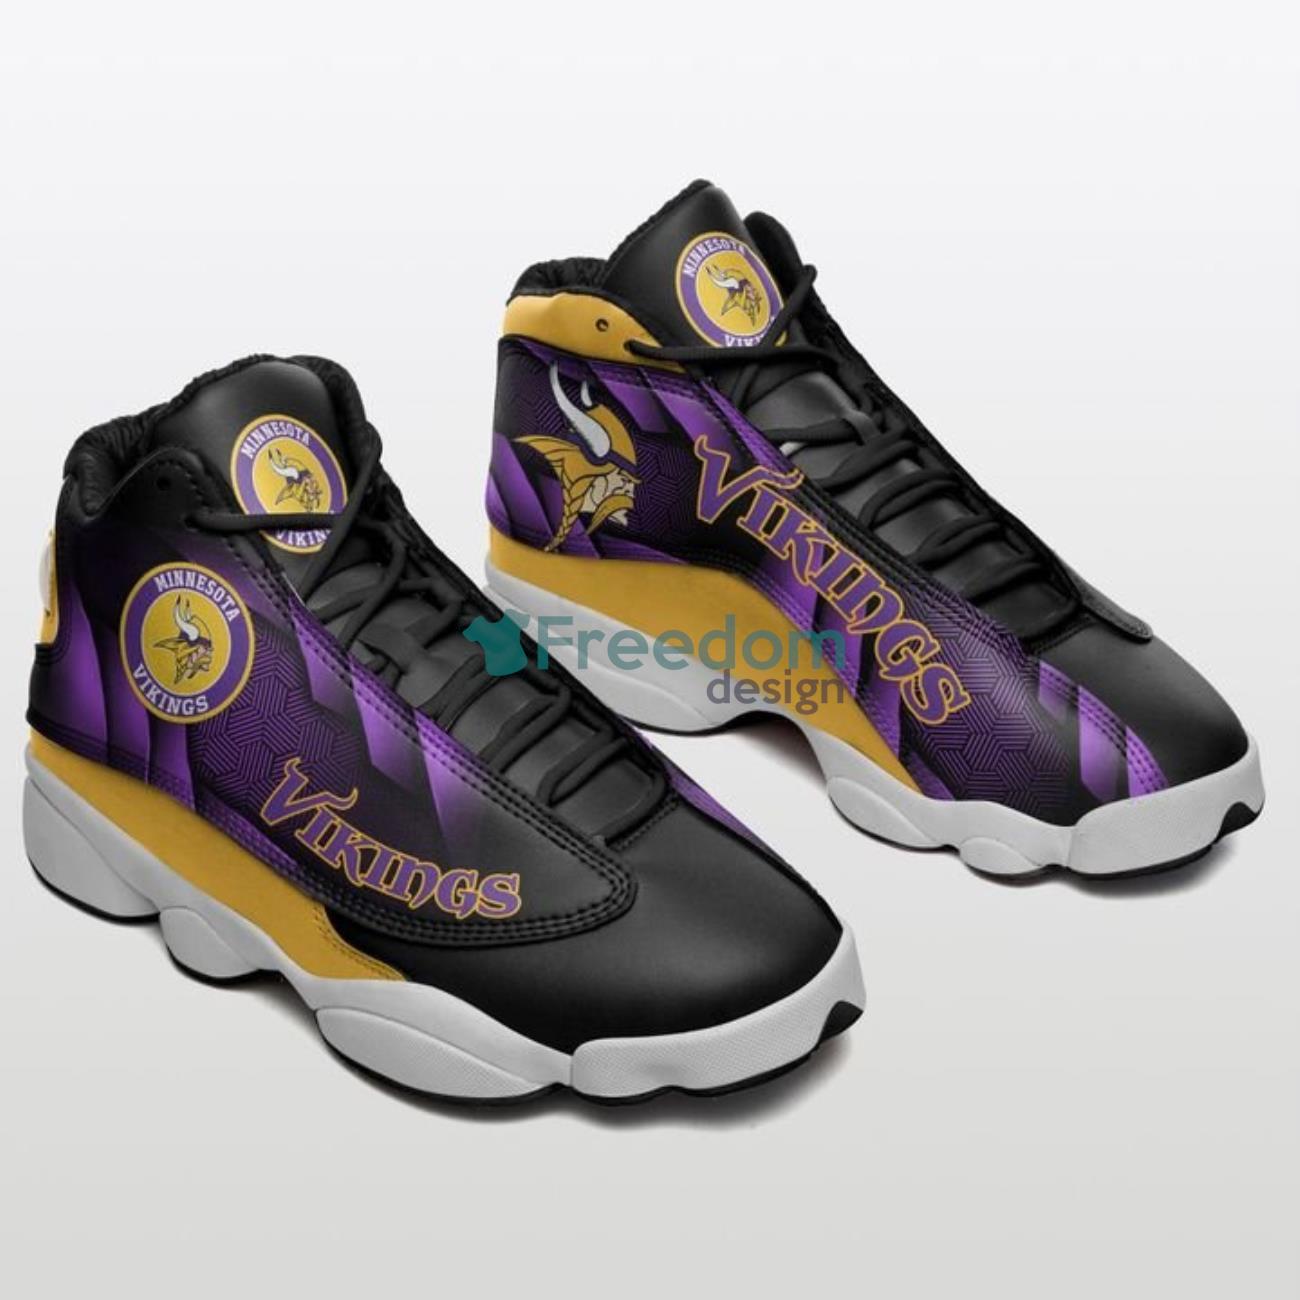 Minnesota Vikings Cool Air Jordan 13 Sneaker Shoes For Fans